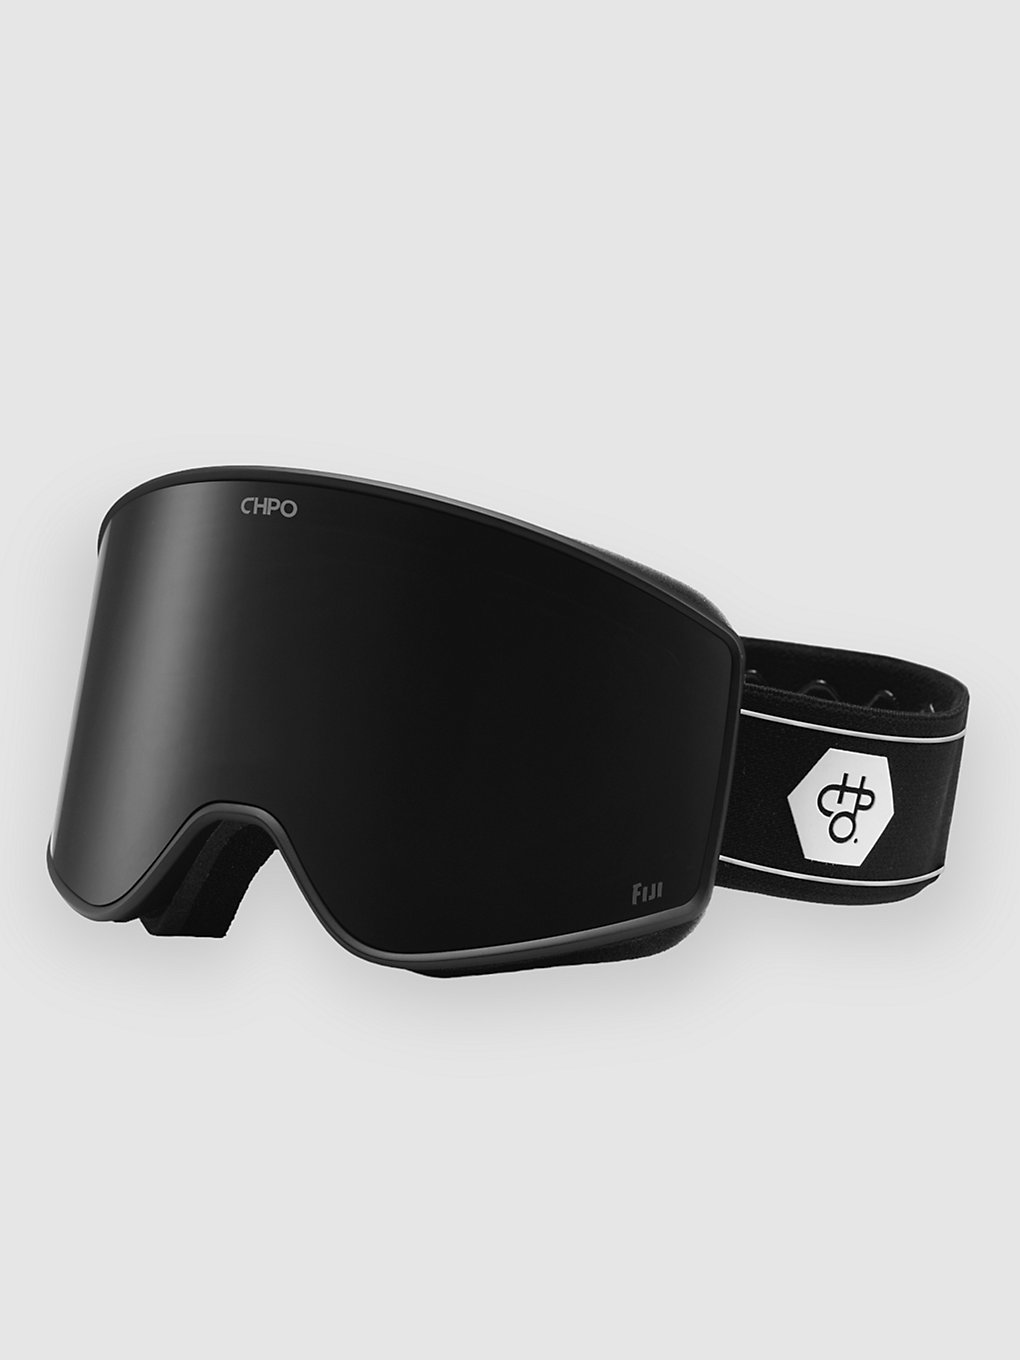 CHPO Fiji Black Goggle black kaufen